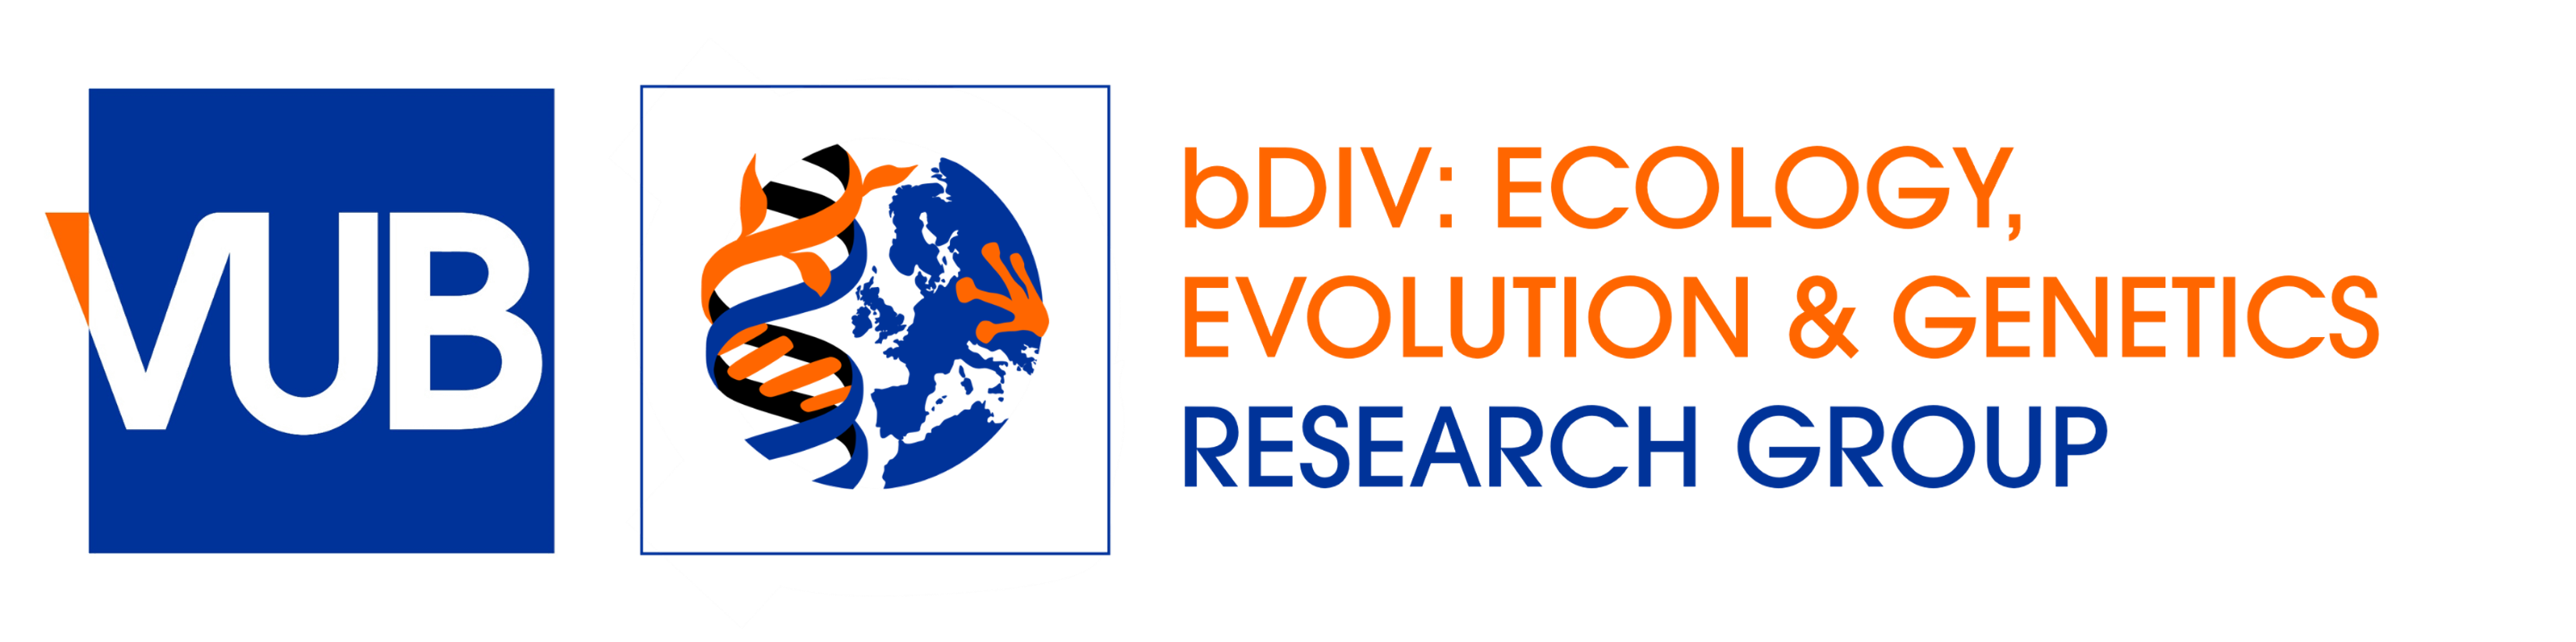 bDIV homepagina